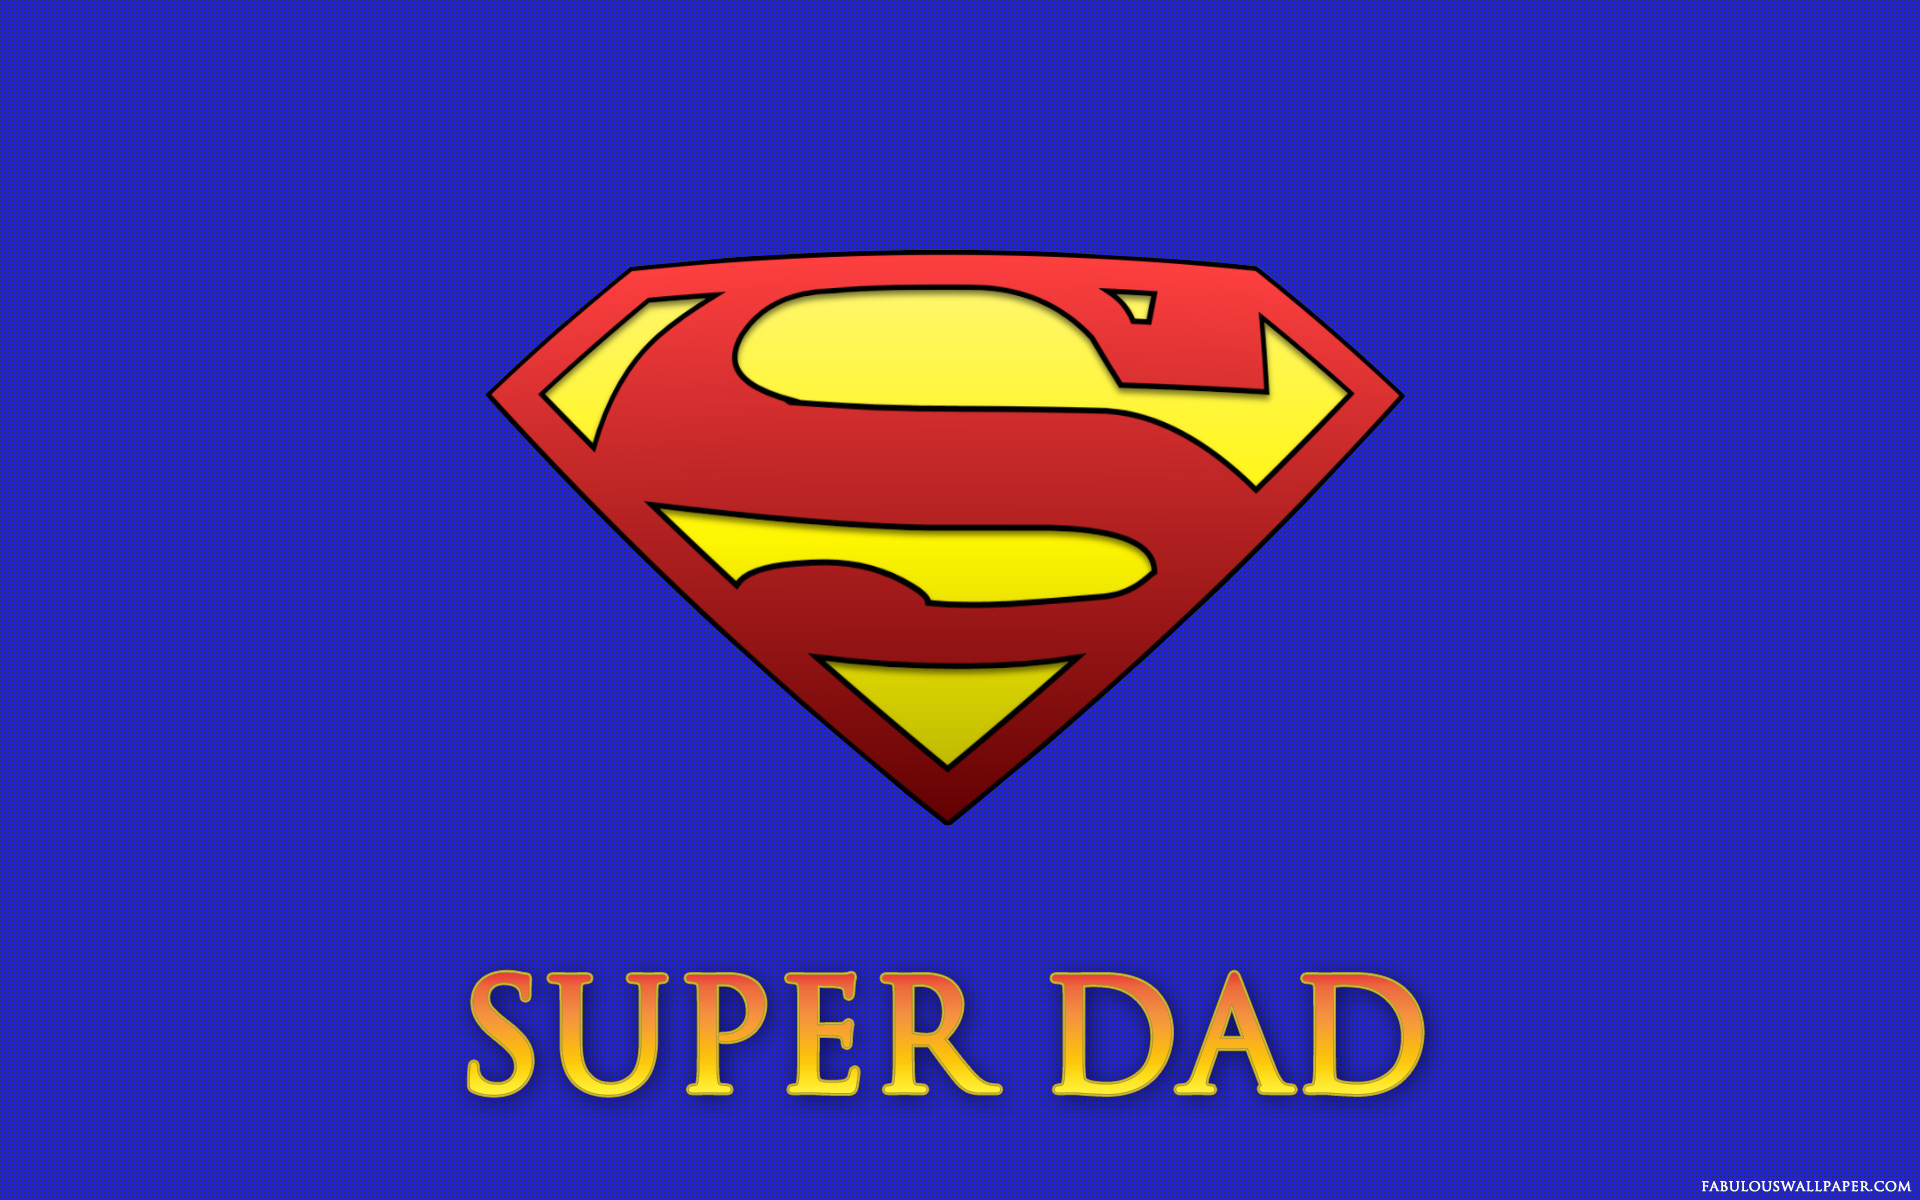 dad wallpaper,fictional character,superhero,logo,superman,justice league